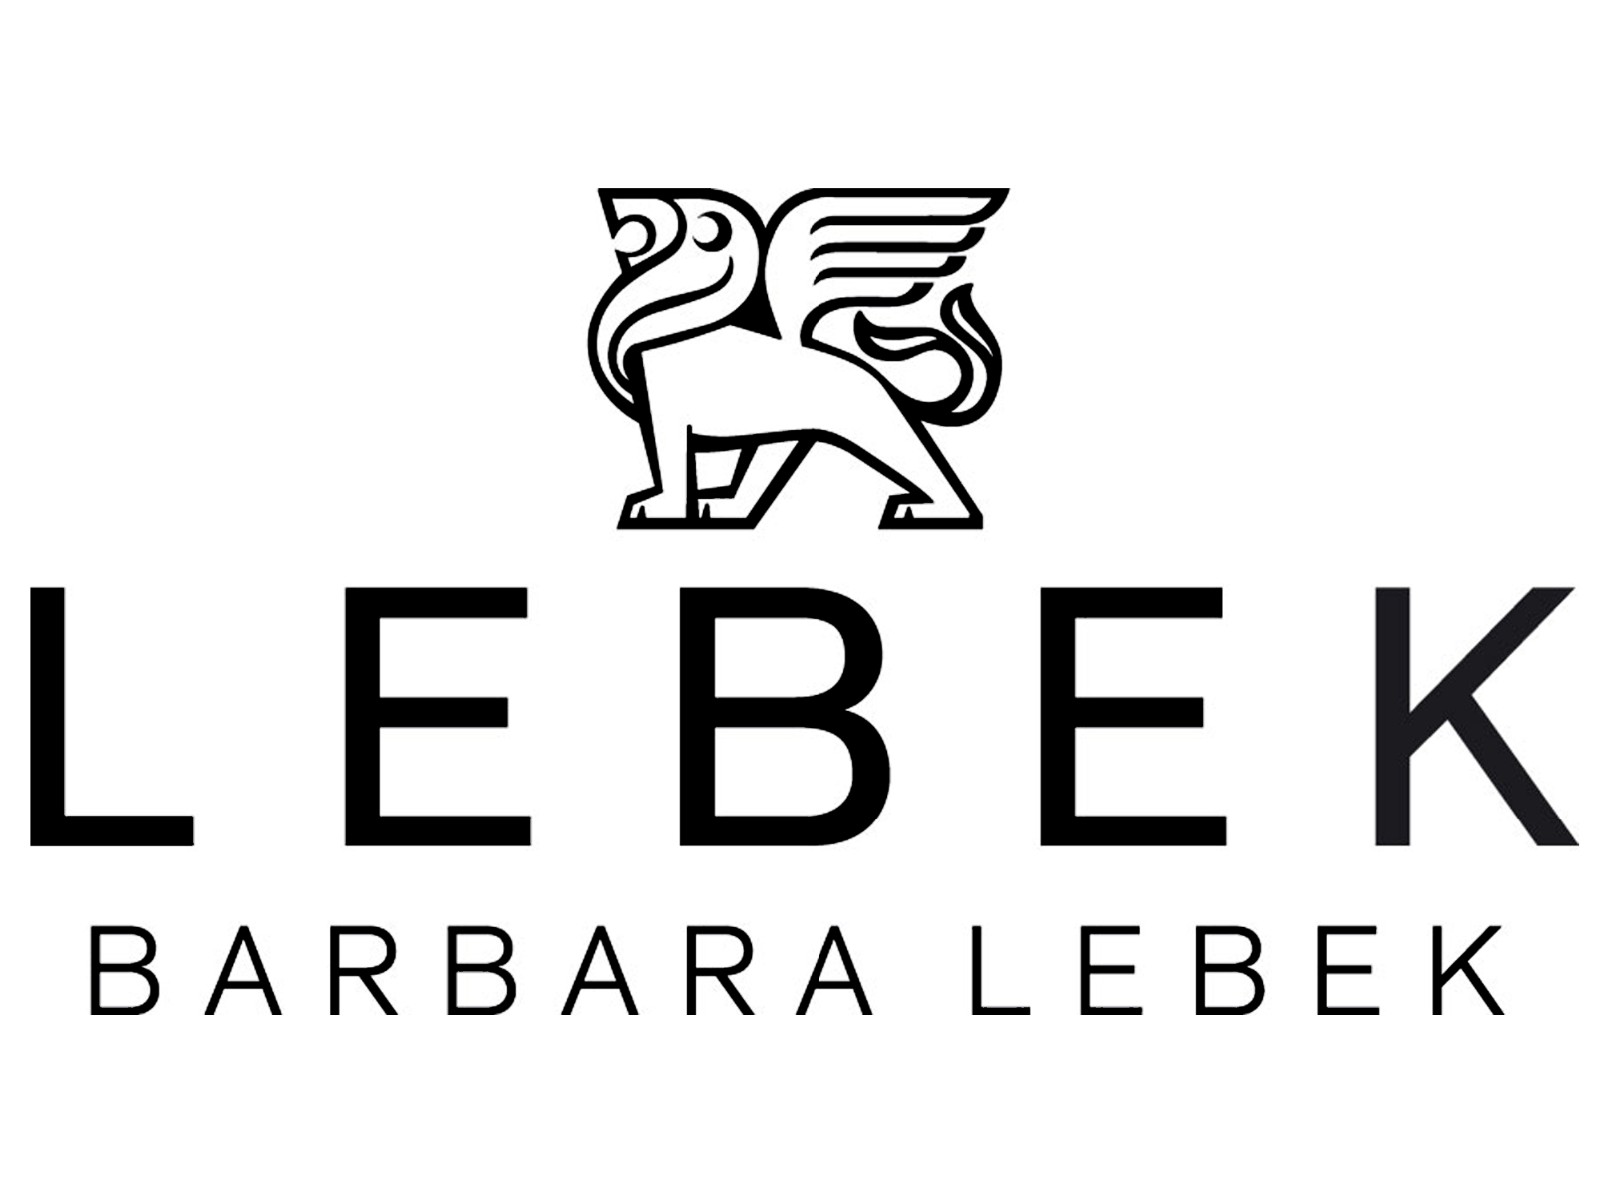 Barbara Lebek logo